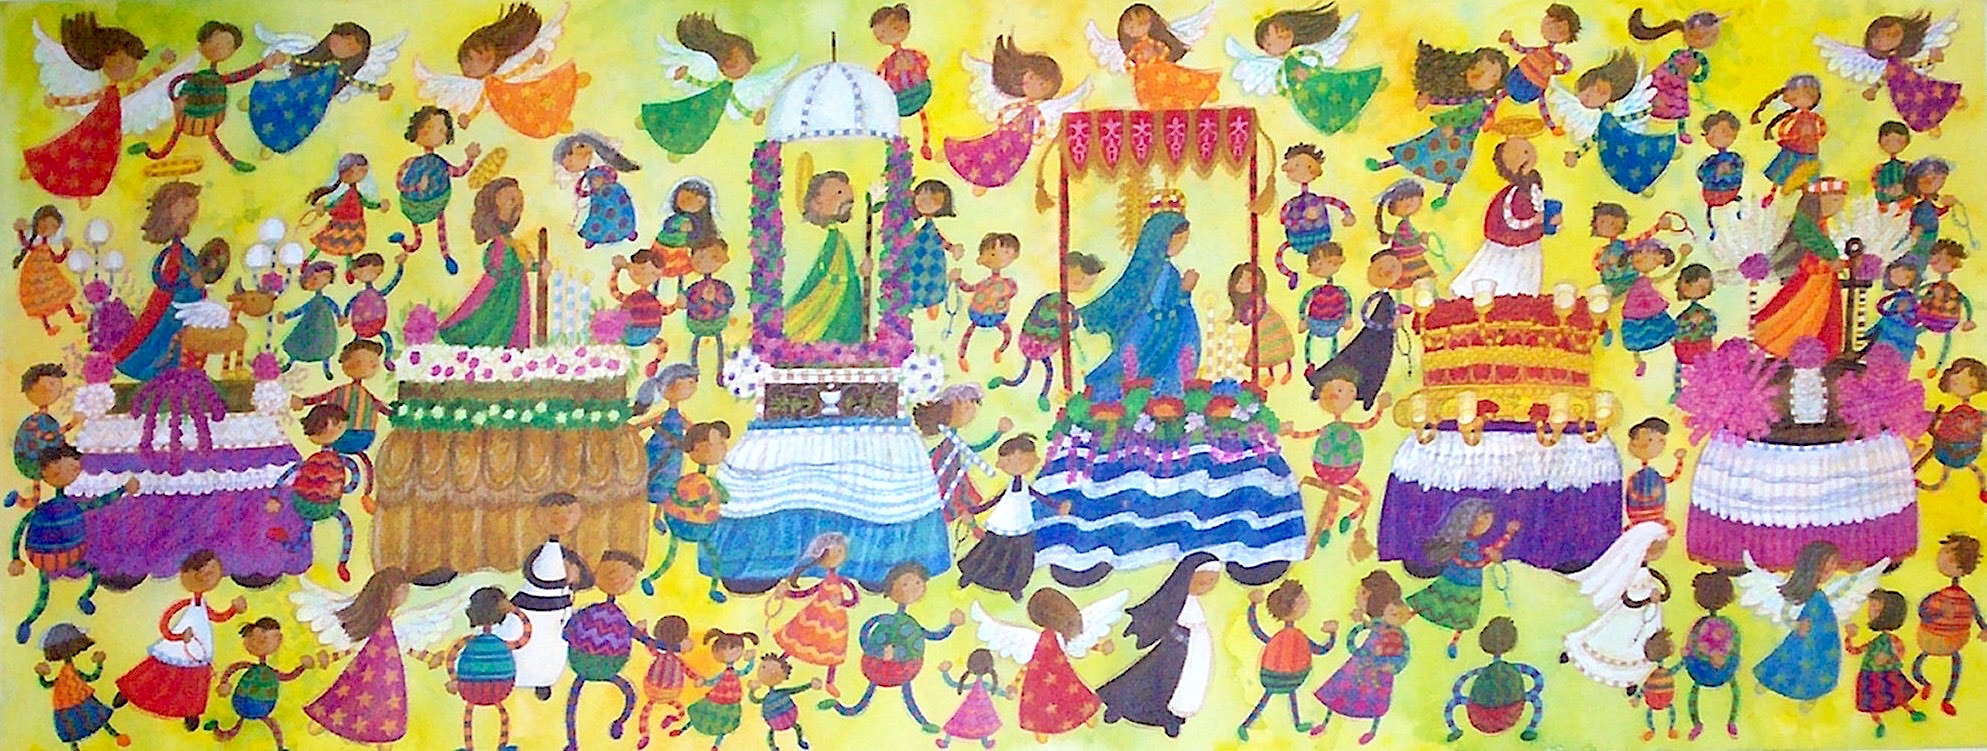 Acrylic and Watercolour Pencil on Paper by Filipino Artist Jill Arwen Posadas entitled Carroza Caravan